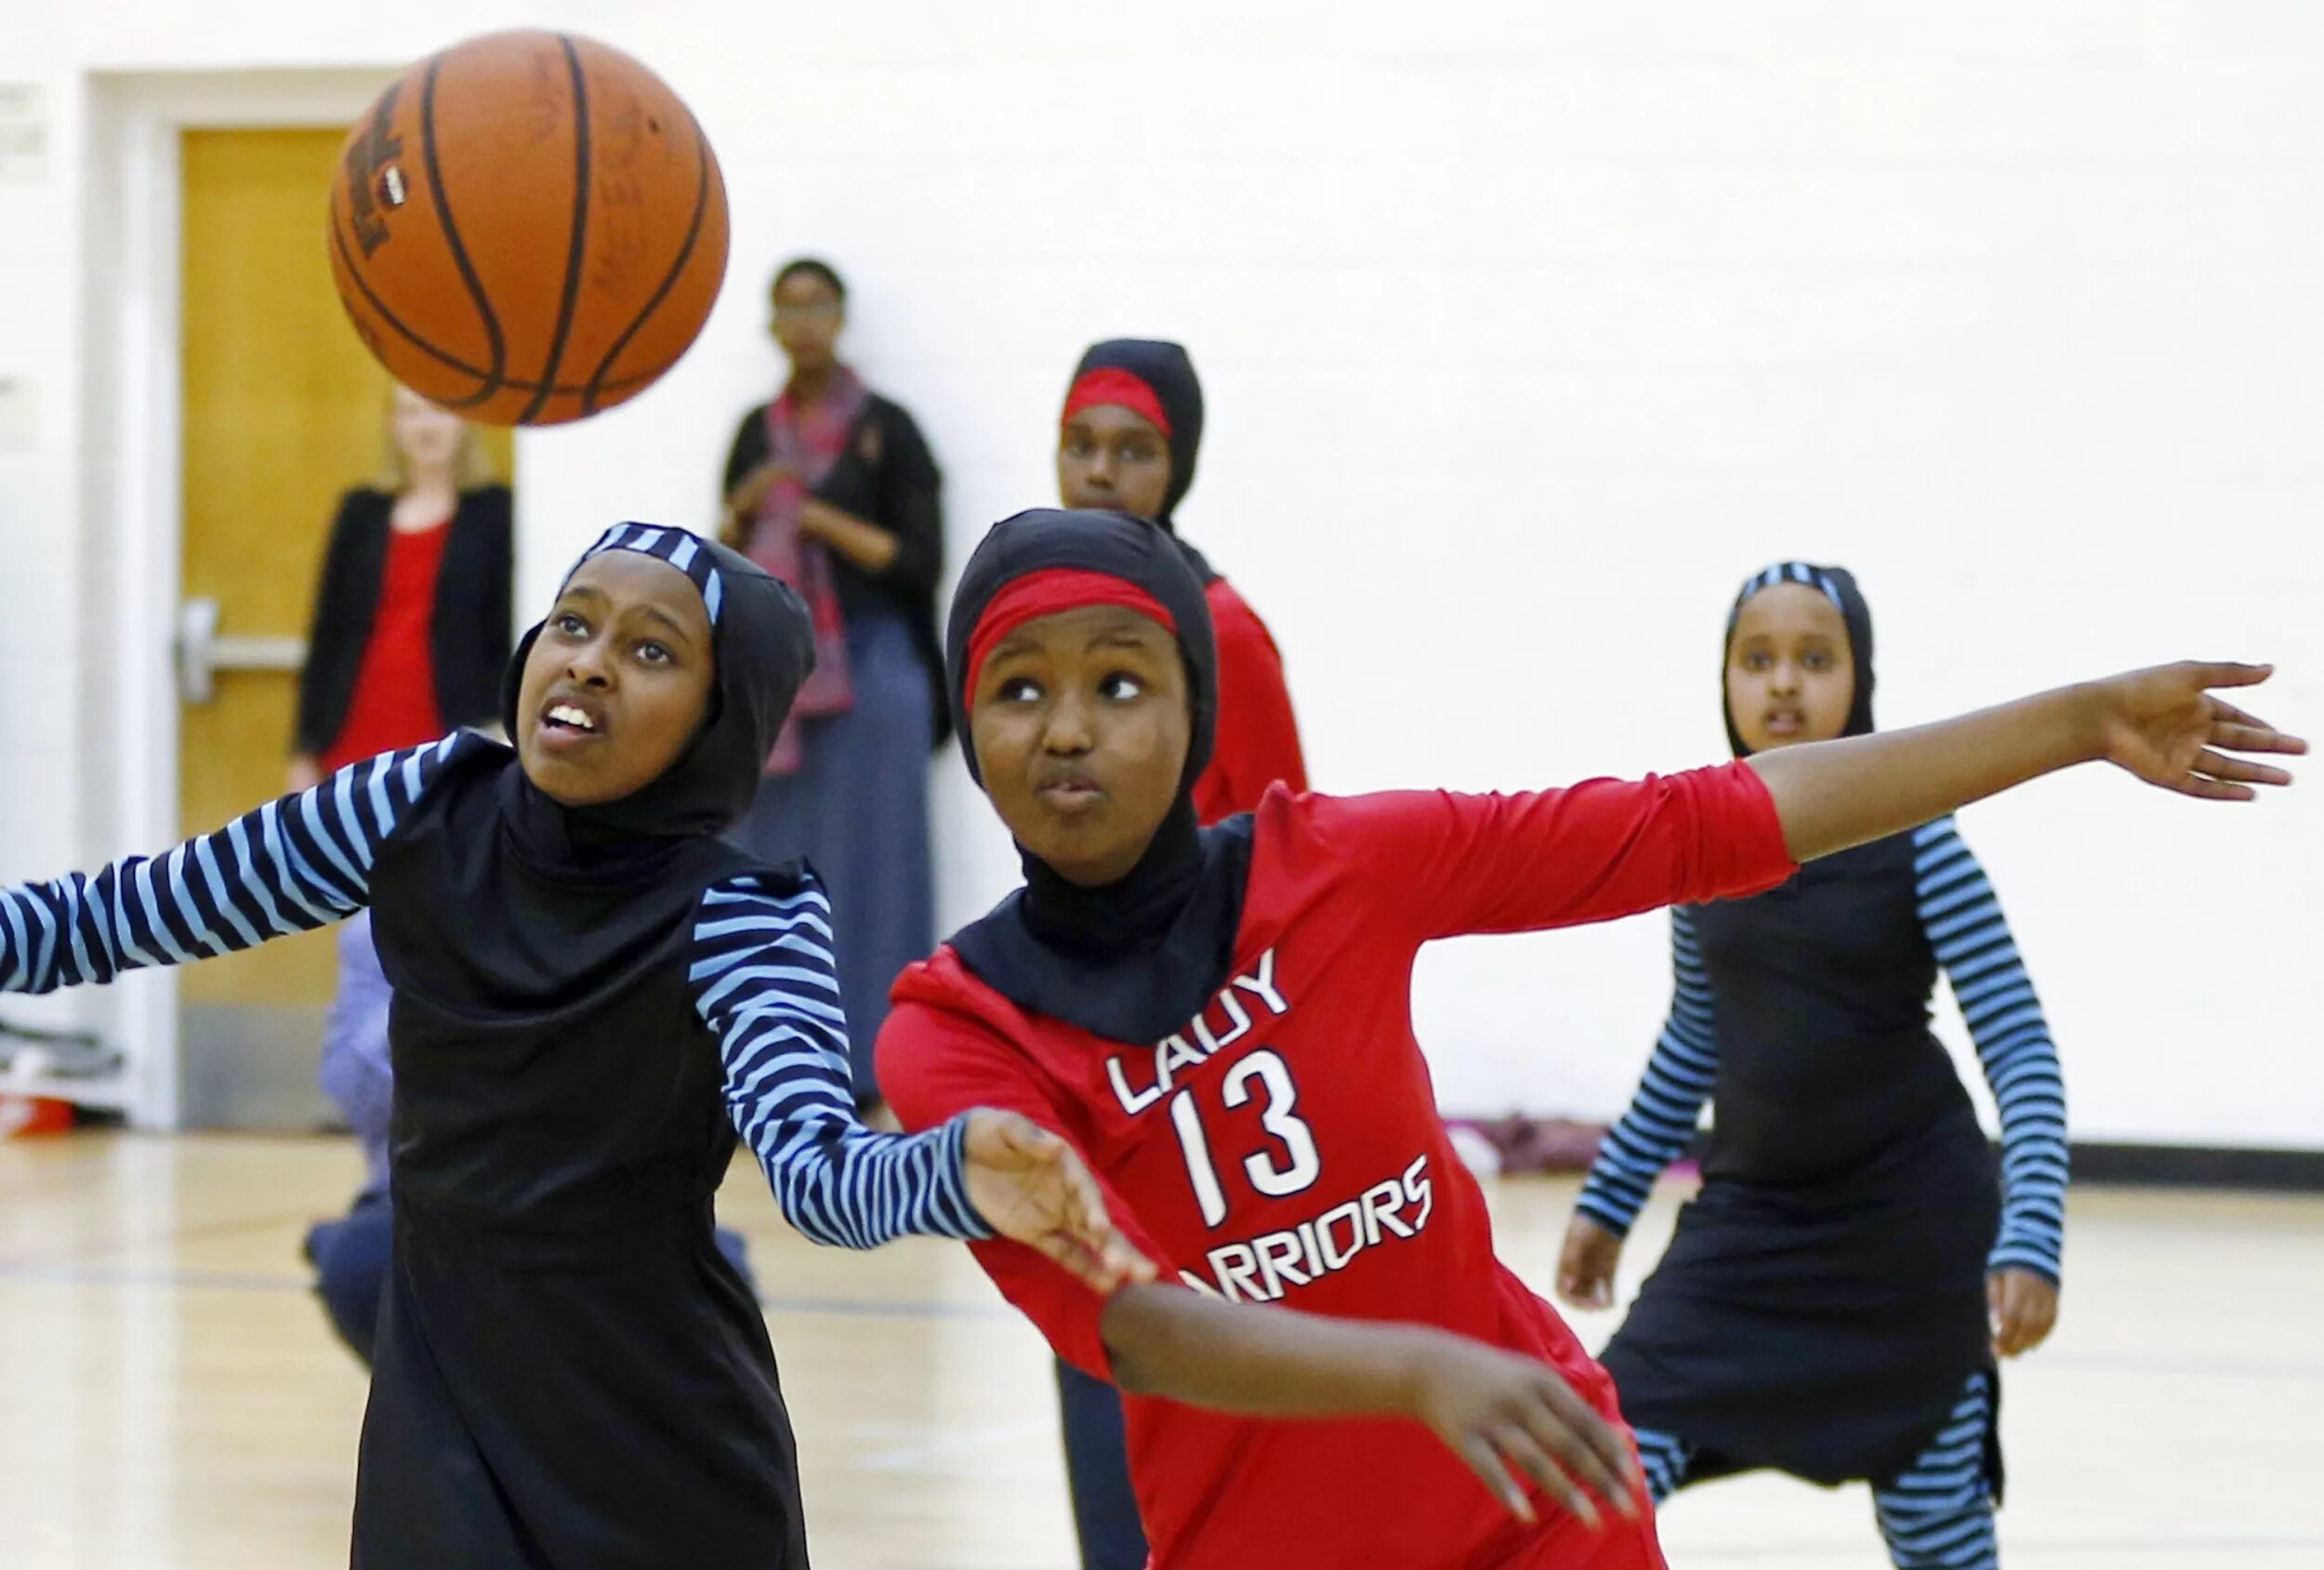 Basketball Muslim girls. Muslims Basketball playing. Muslim girls Basketball playing. During 16